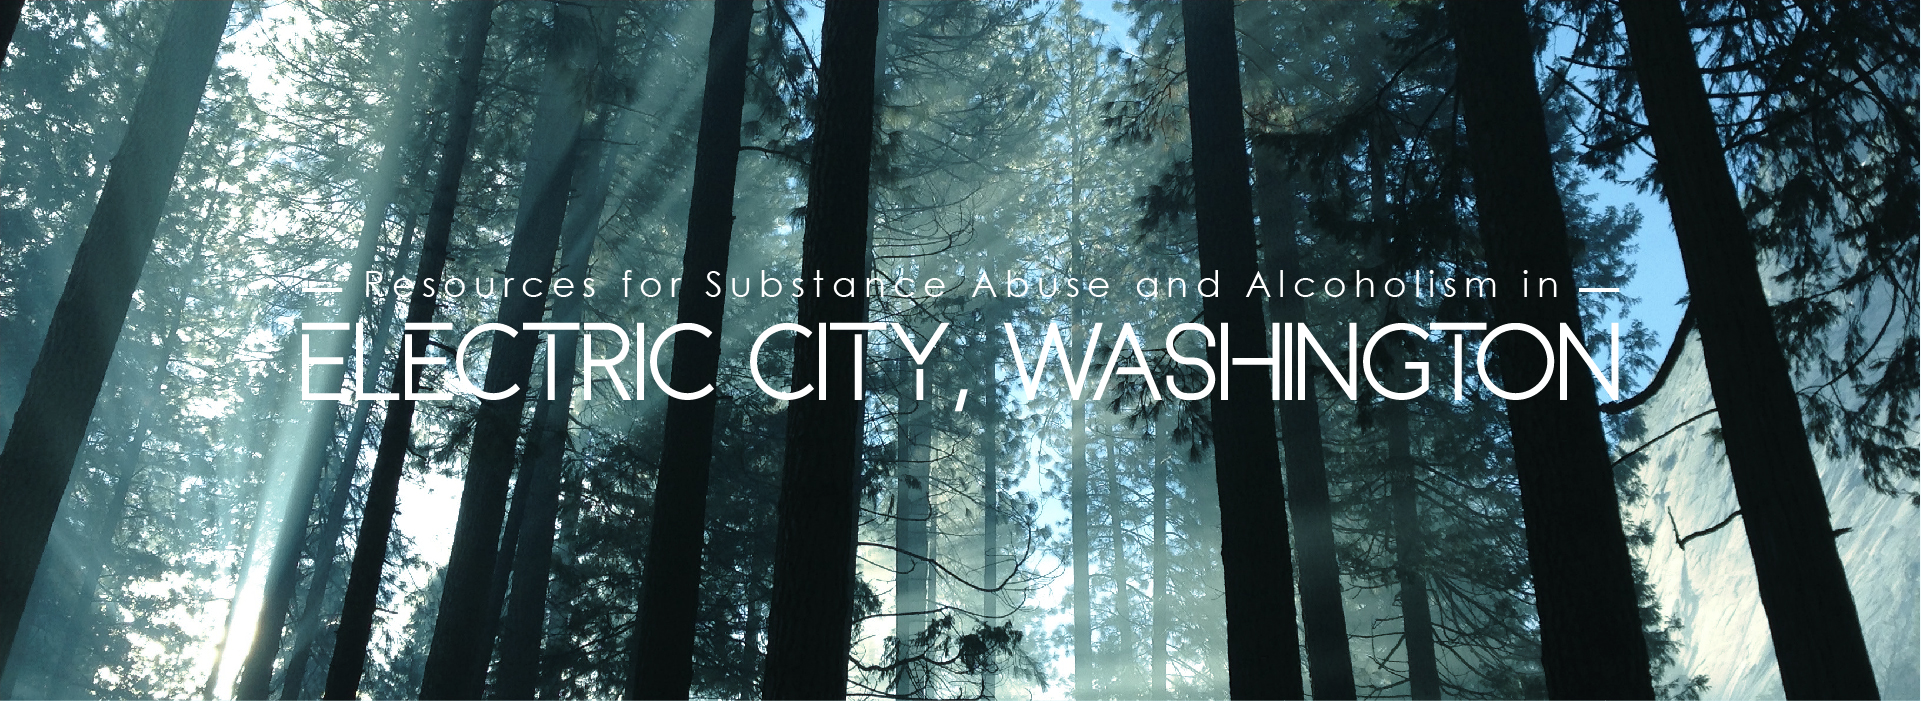 Electric City, Washington Addiction Resources